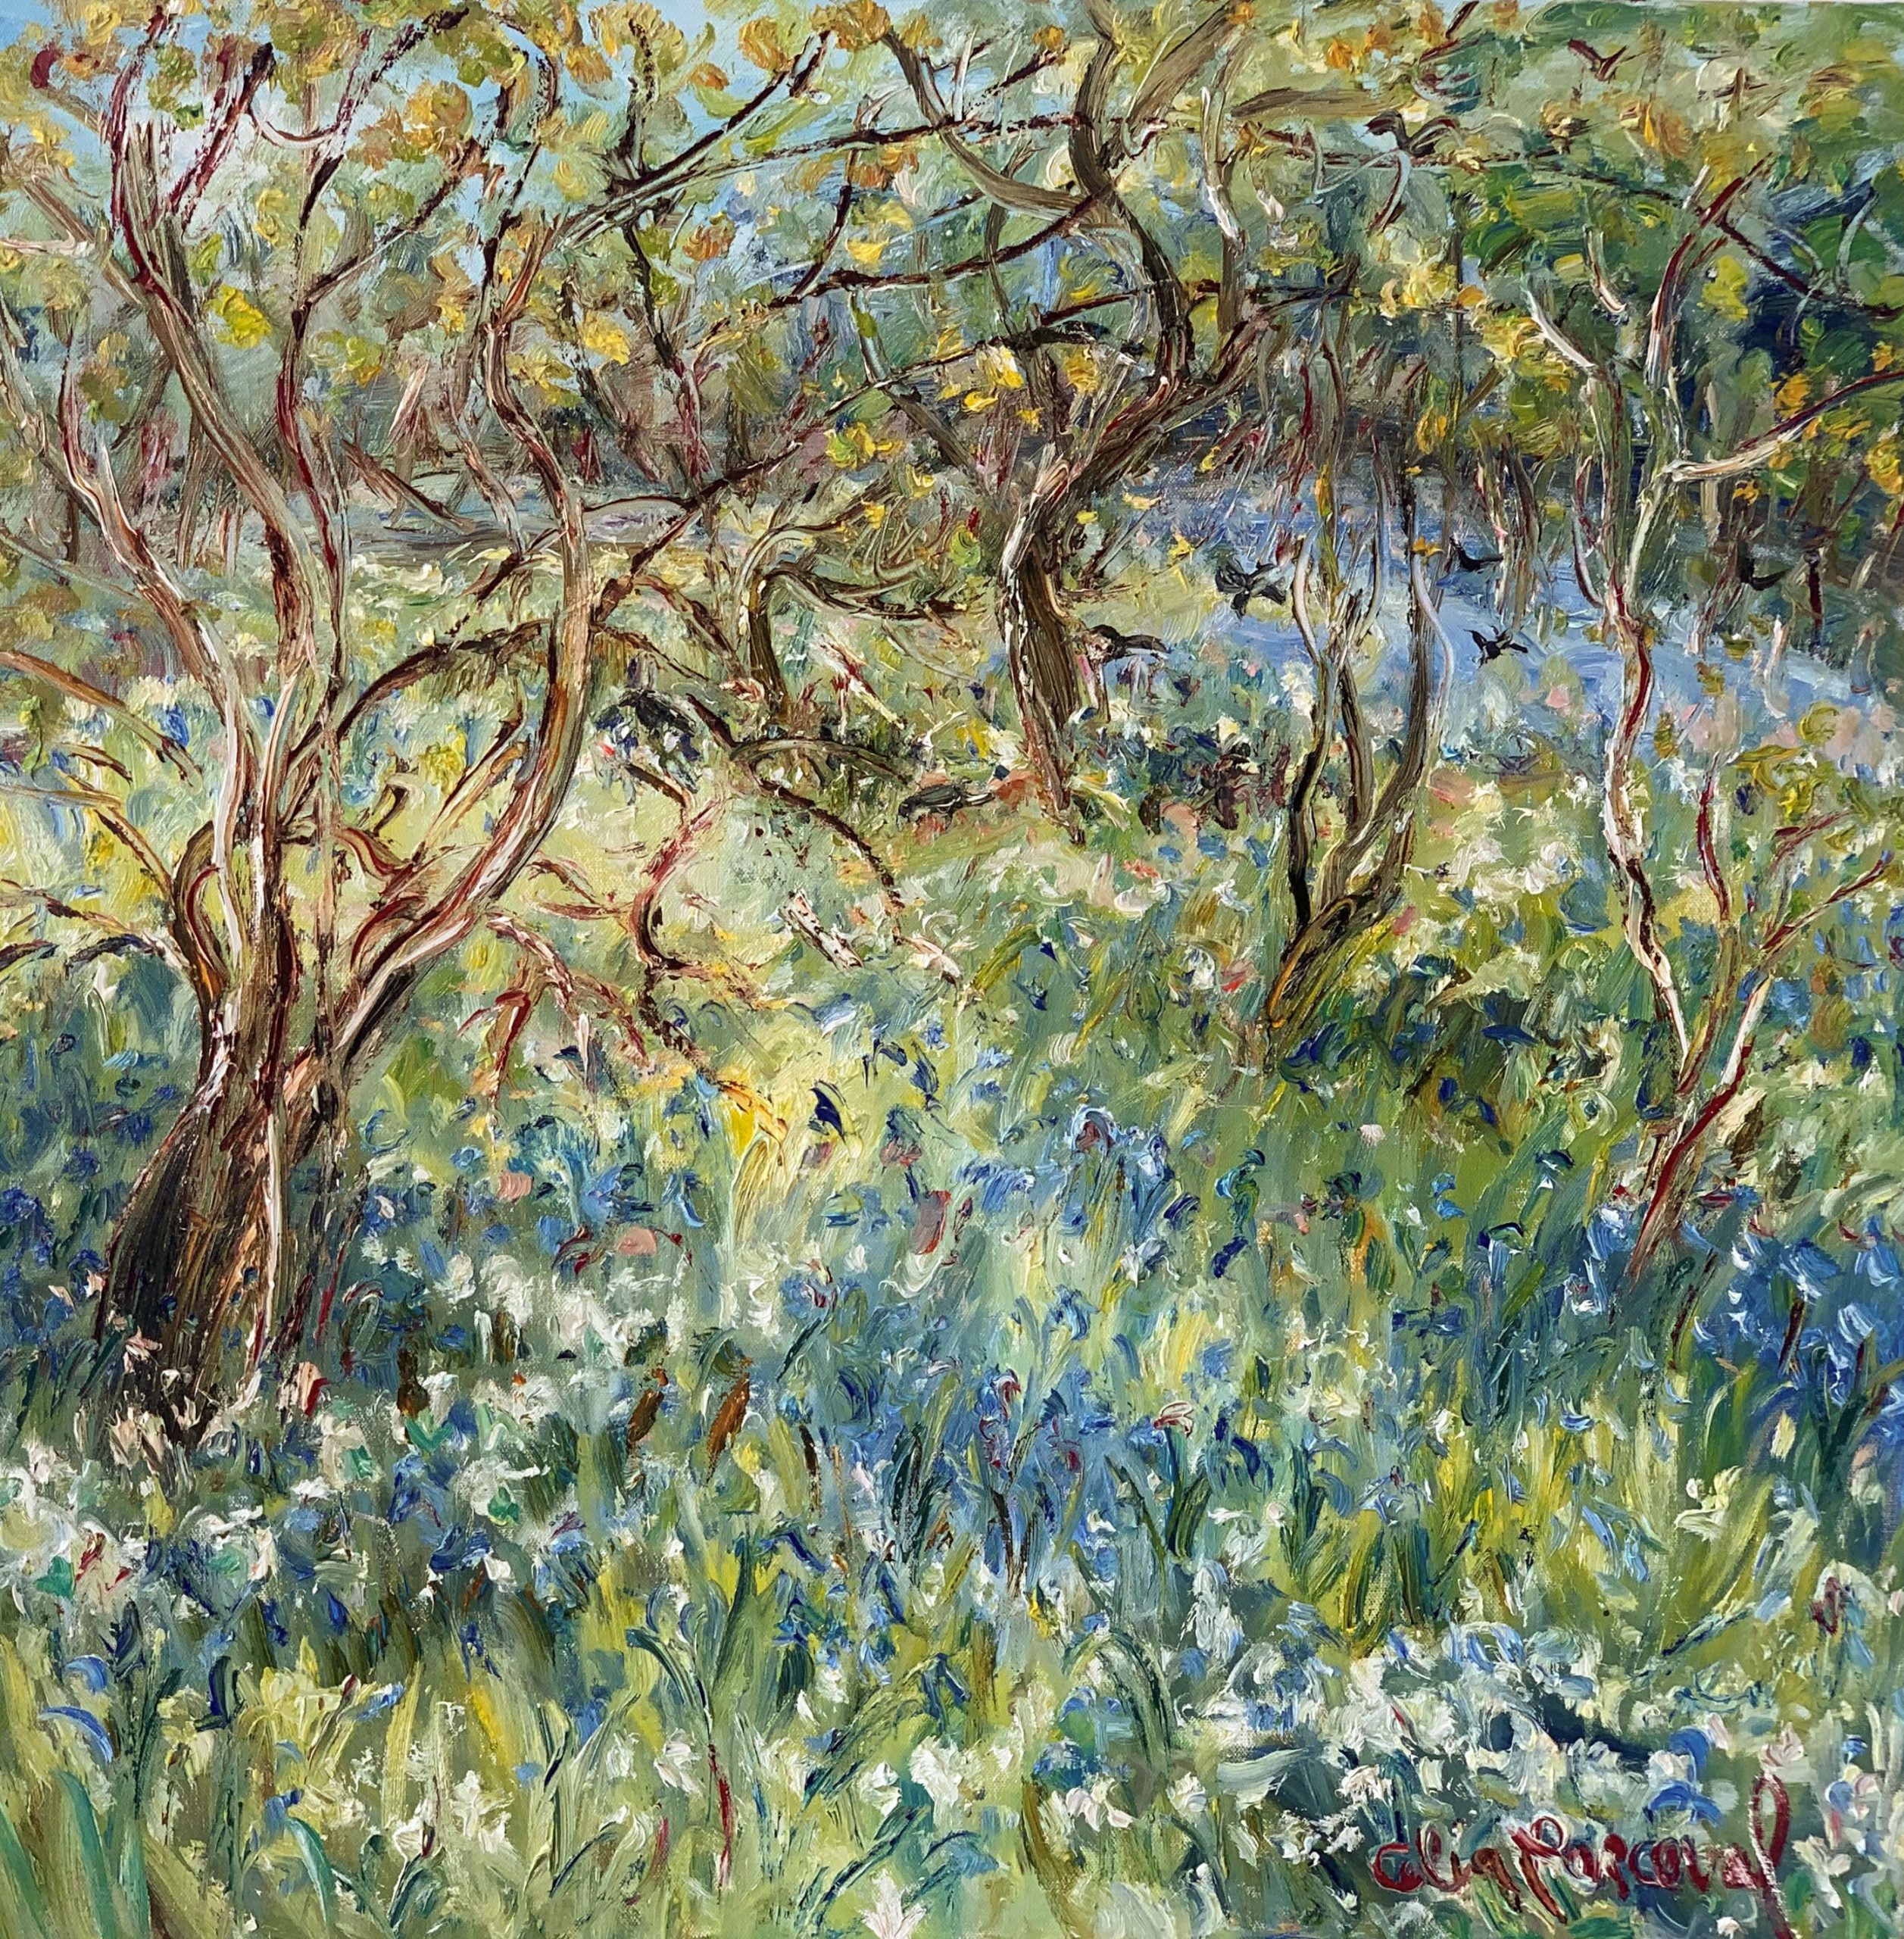 Celia Perceval 'Bluebells in Wild Garlic on the Rodd Wood' oil on canvas 76 x 76cm $13,000